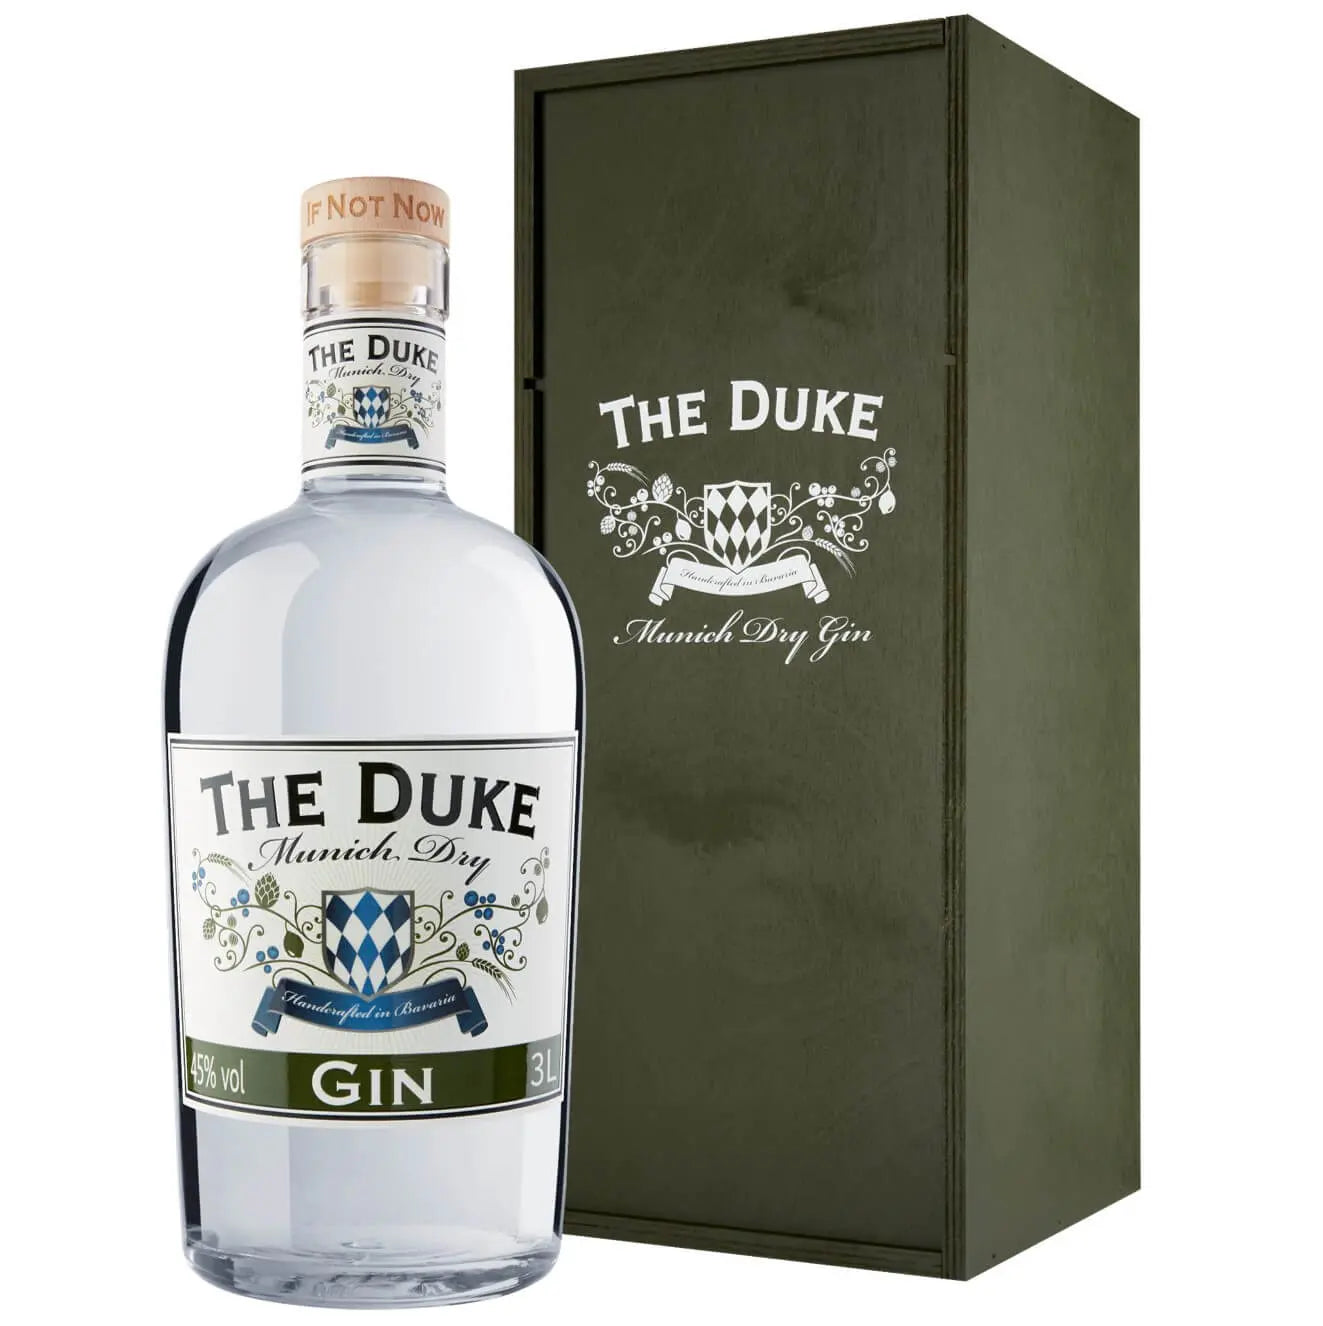 THE DUKE - Munich Dry (3 Gin liters)